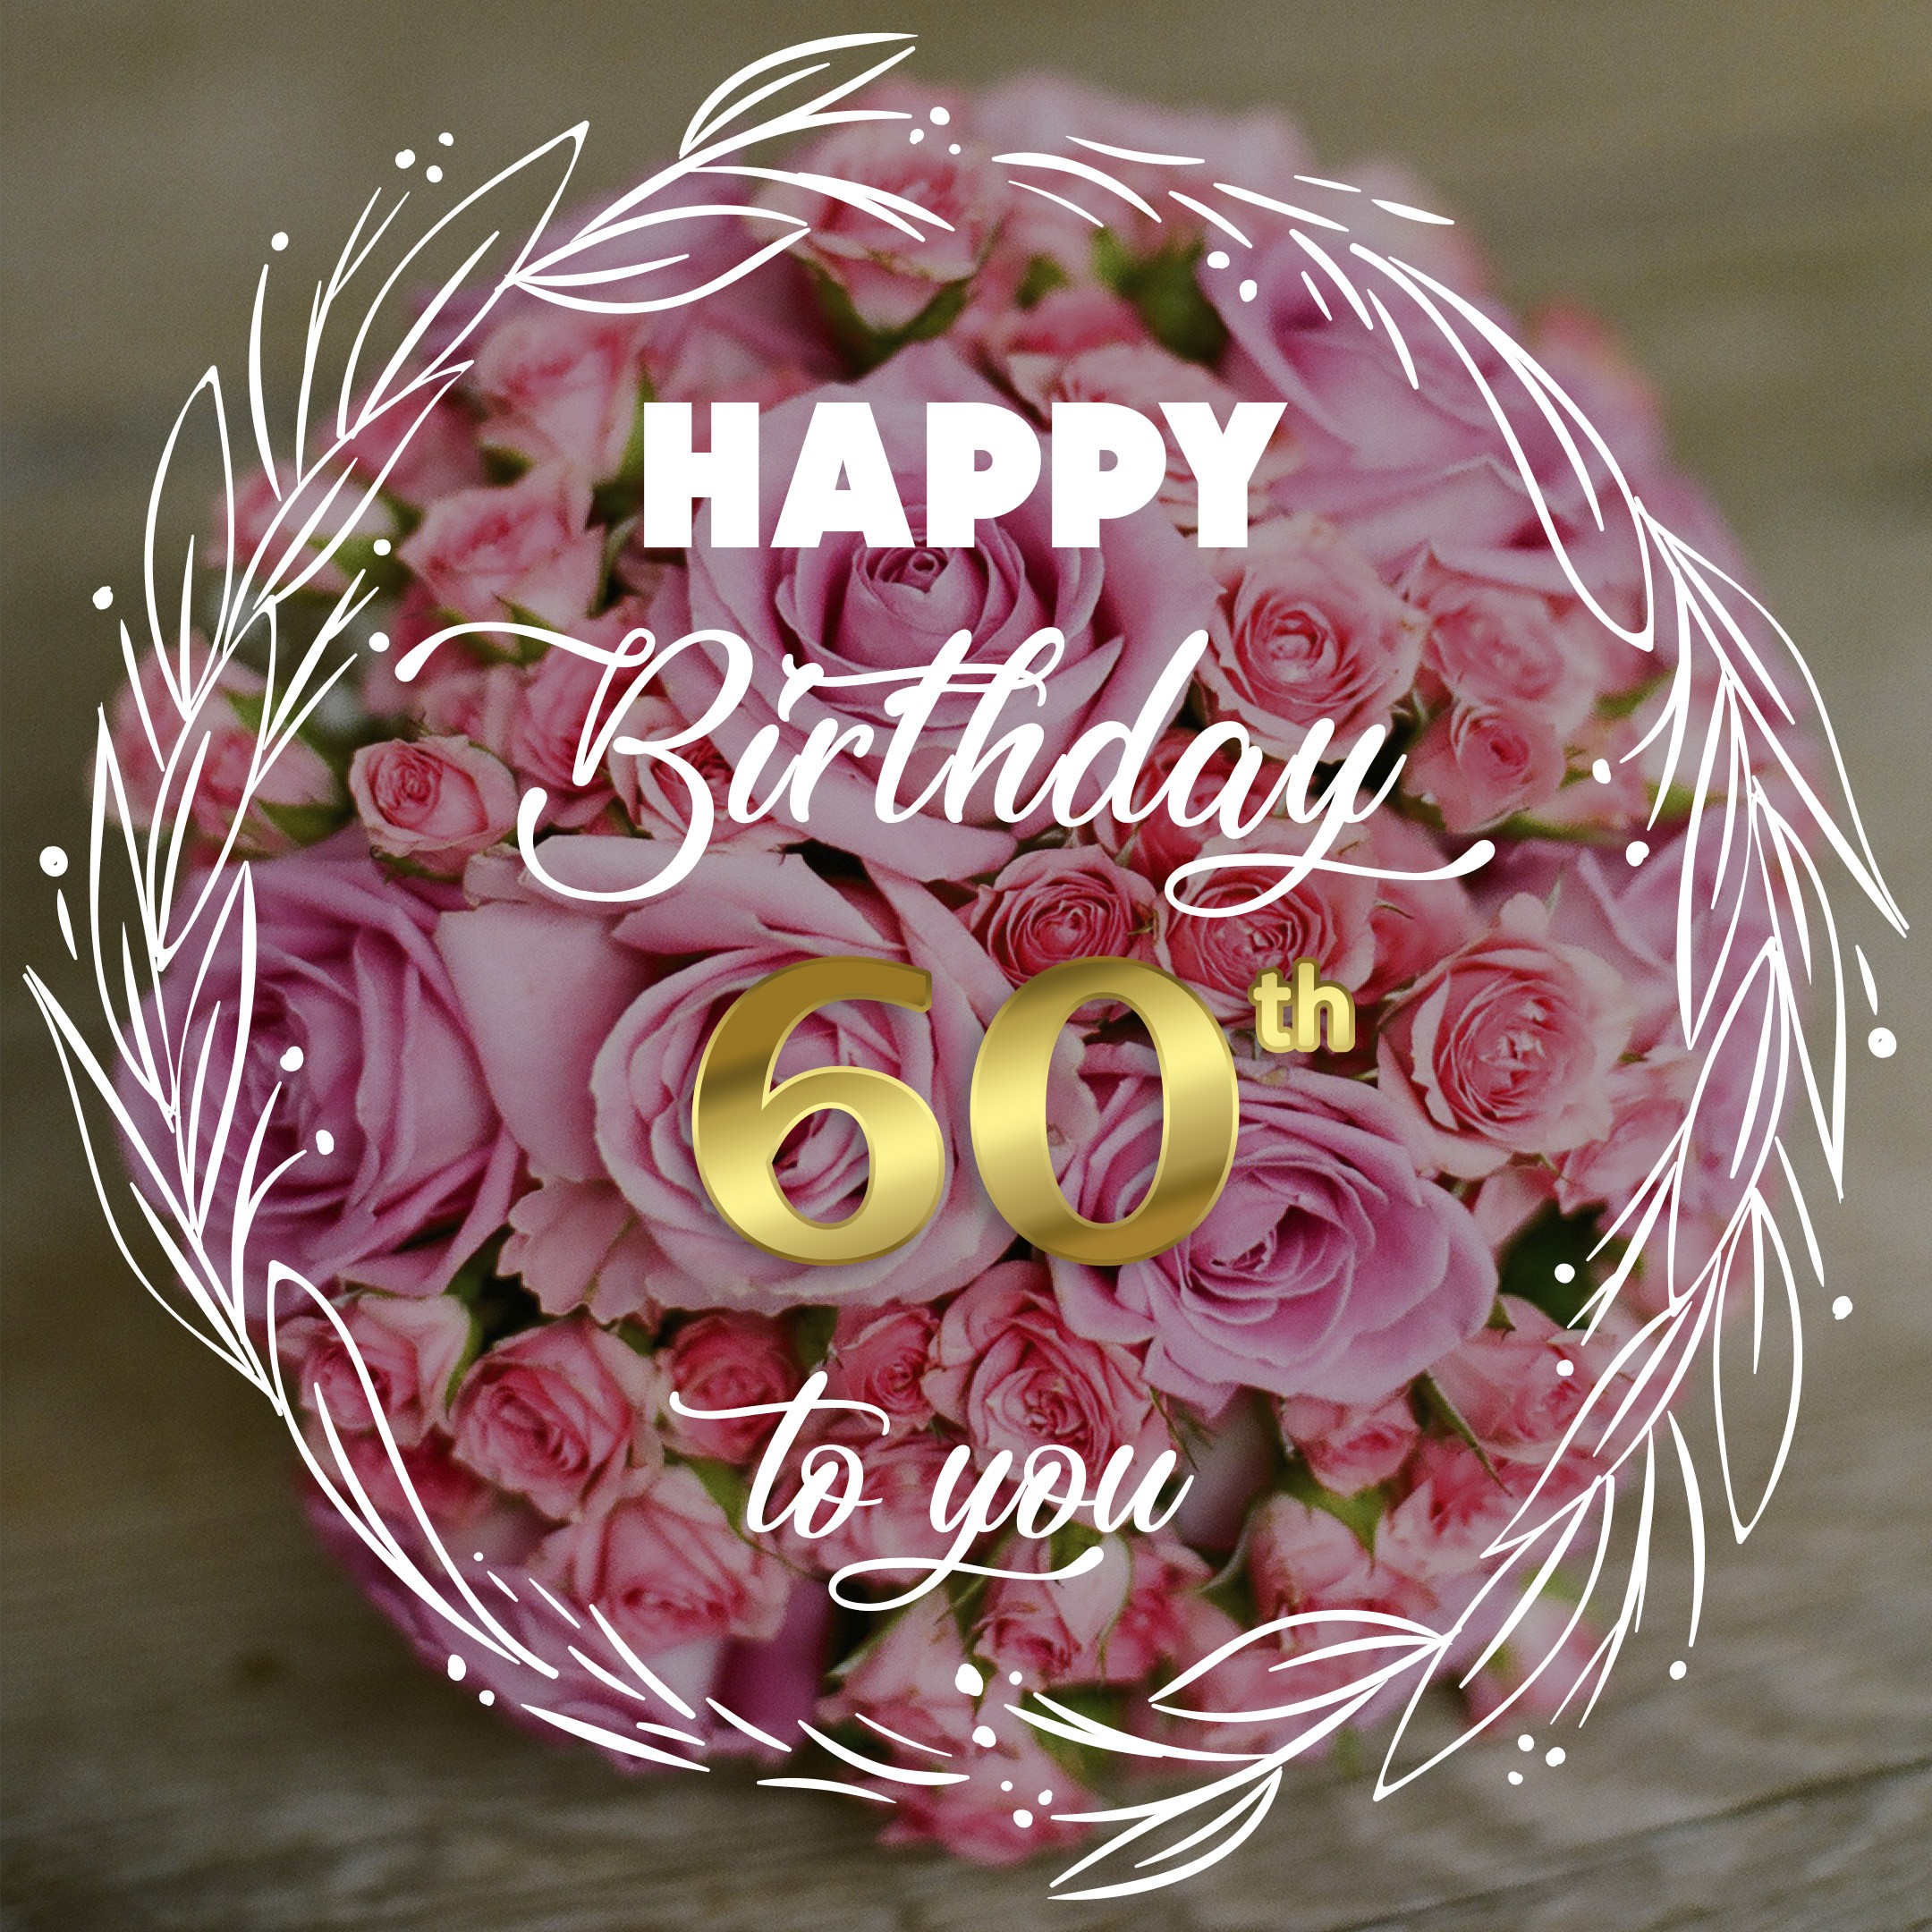 Free 60th Years Happy Birthday Image With Flowers - birthdayimg.com